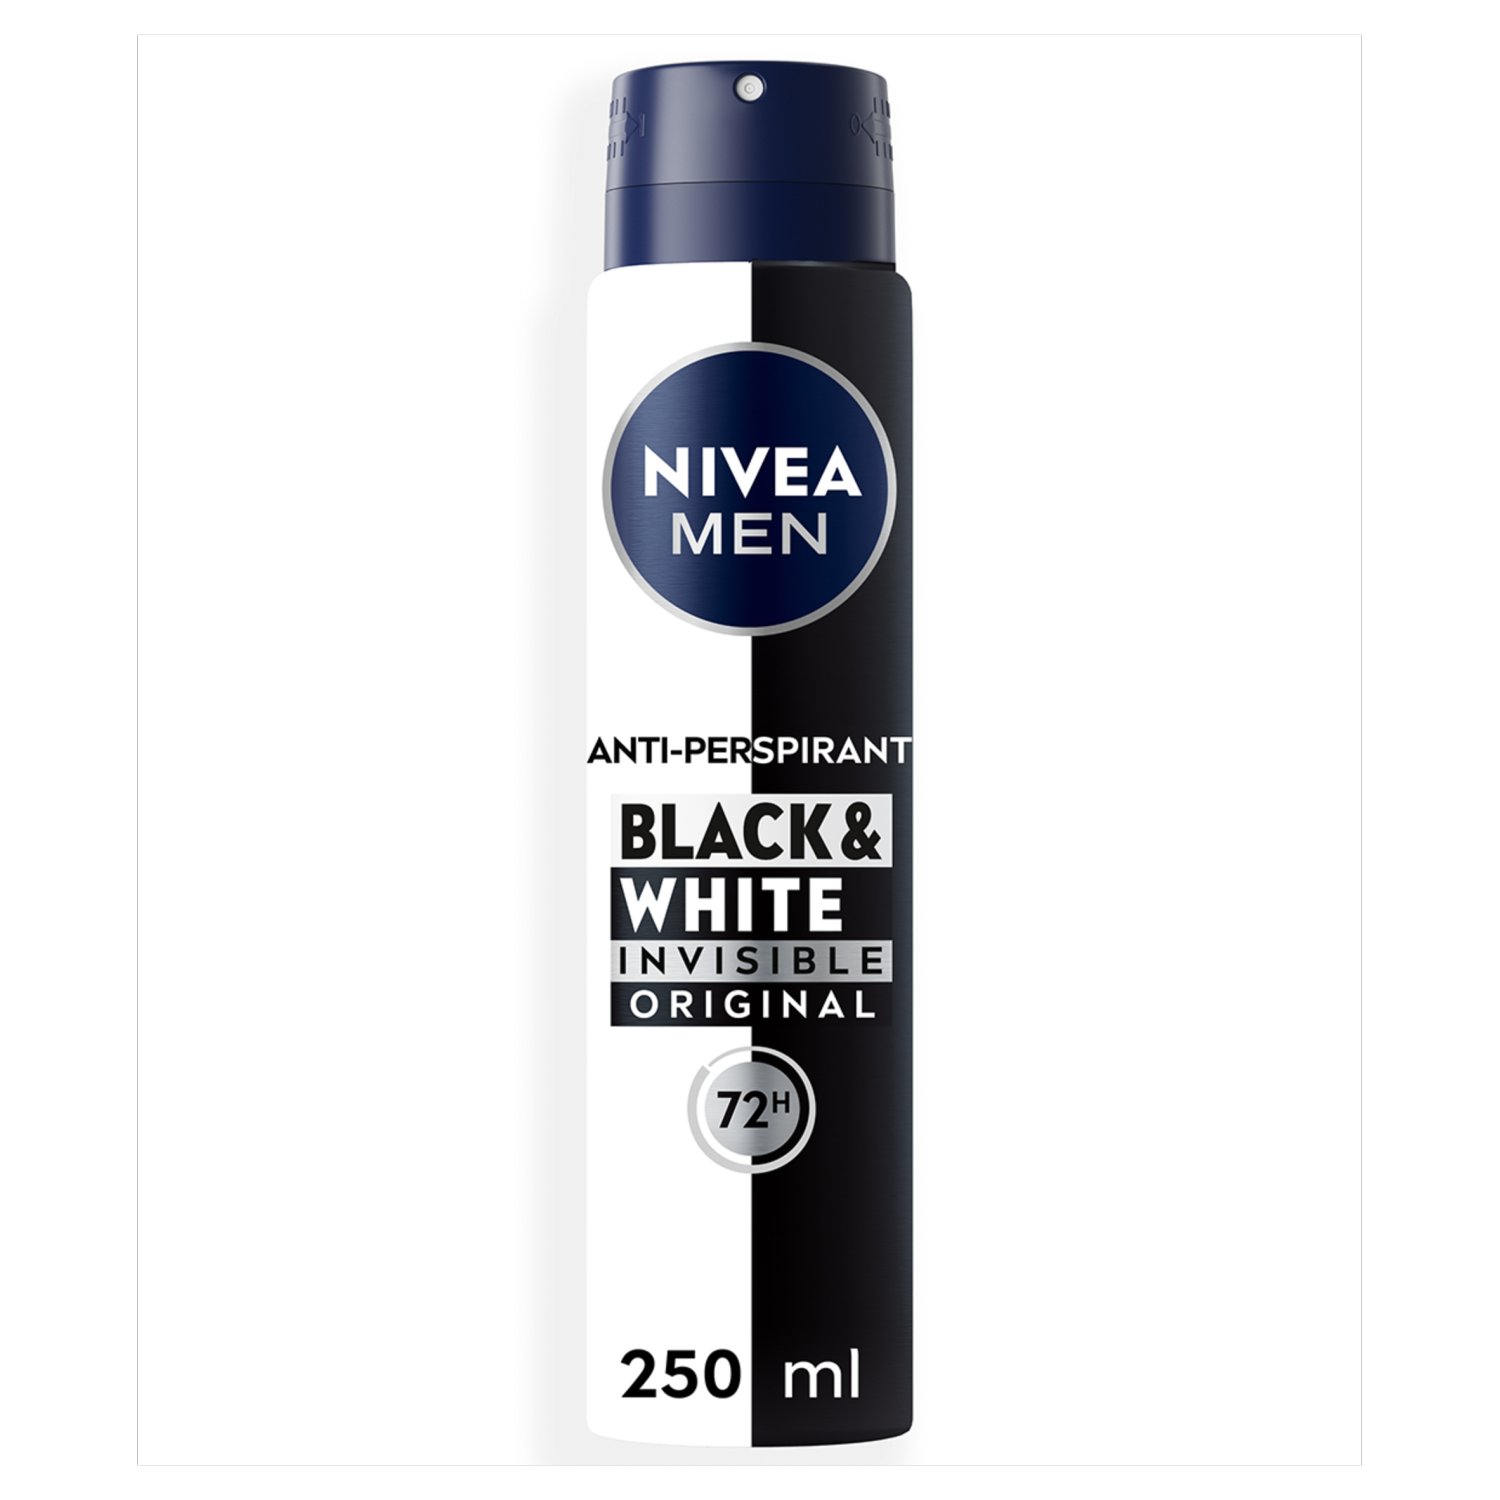 Nivea Men Black and White Invisible Original Anti-Perspirant Deodorant (250 ml)